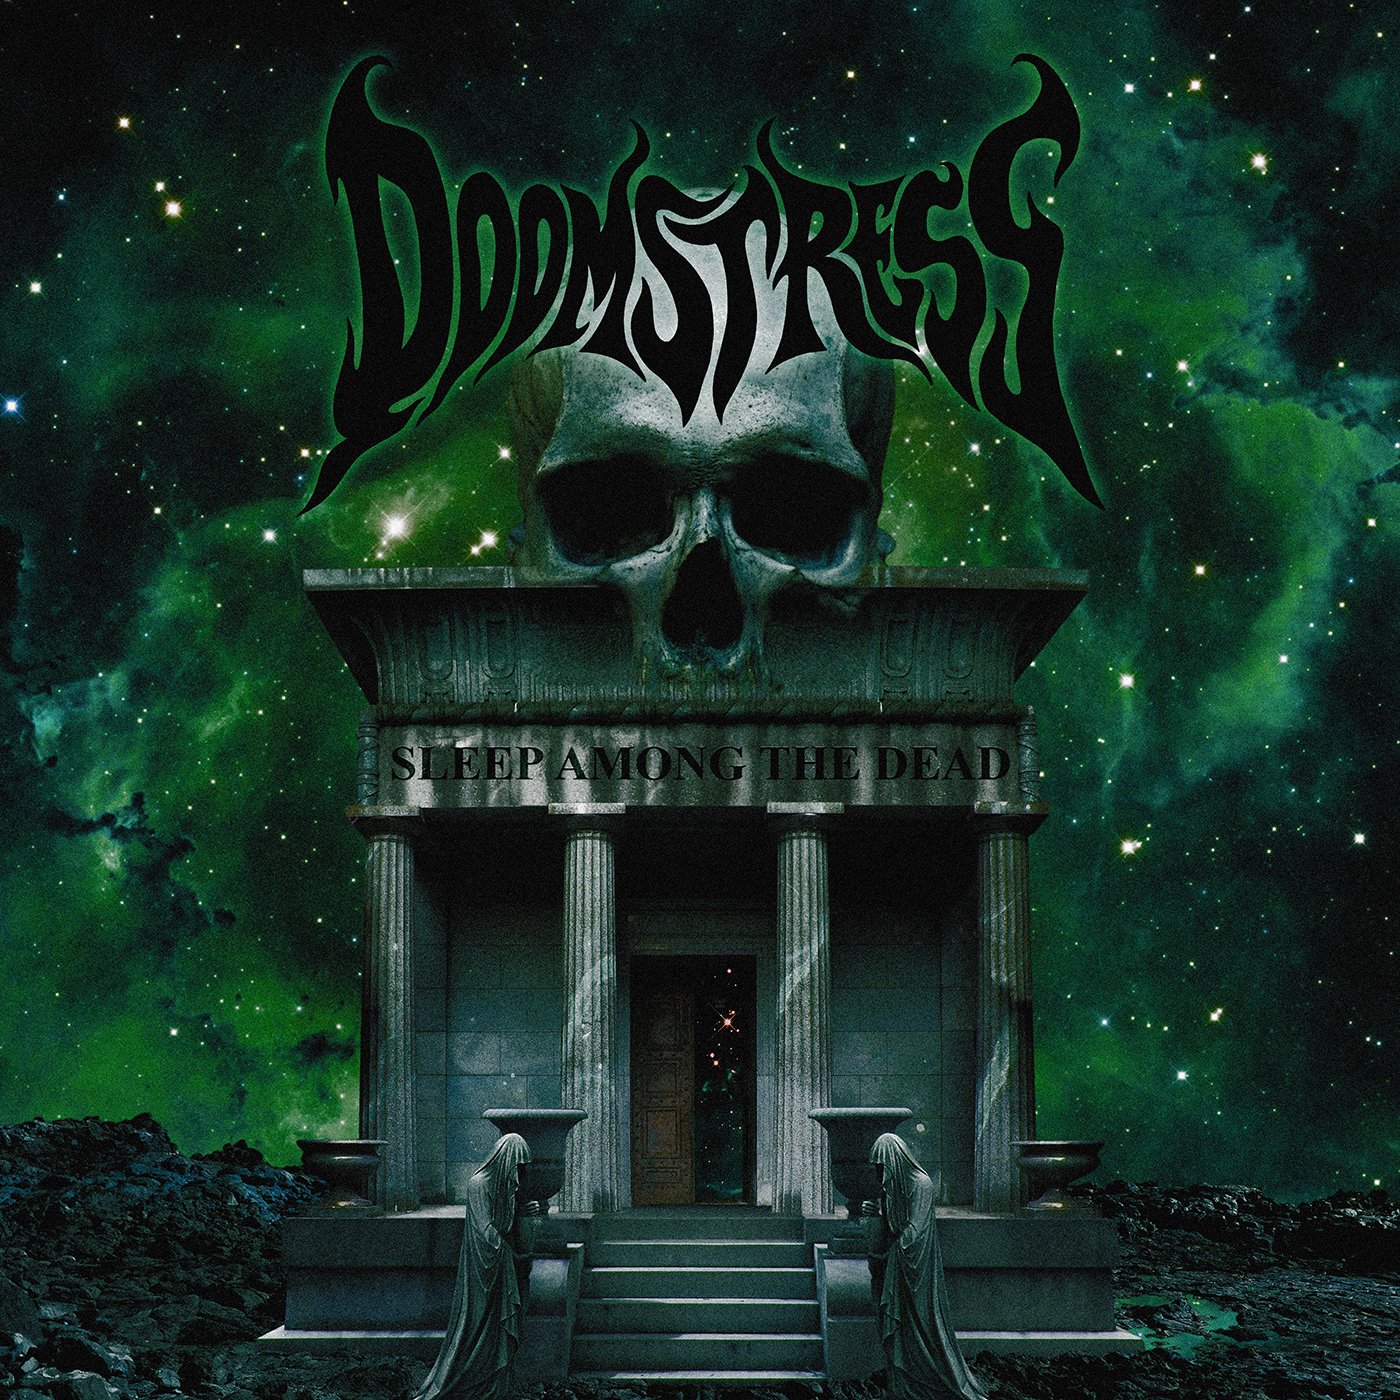 Image of Doomstress - Sleep Among the Dead CD